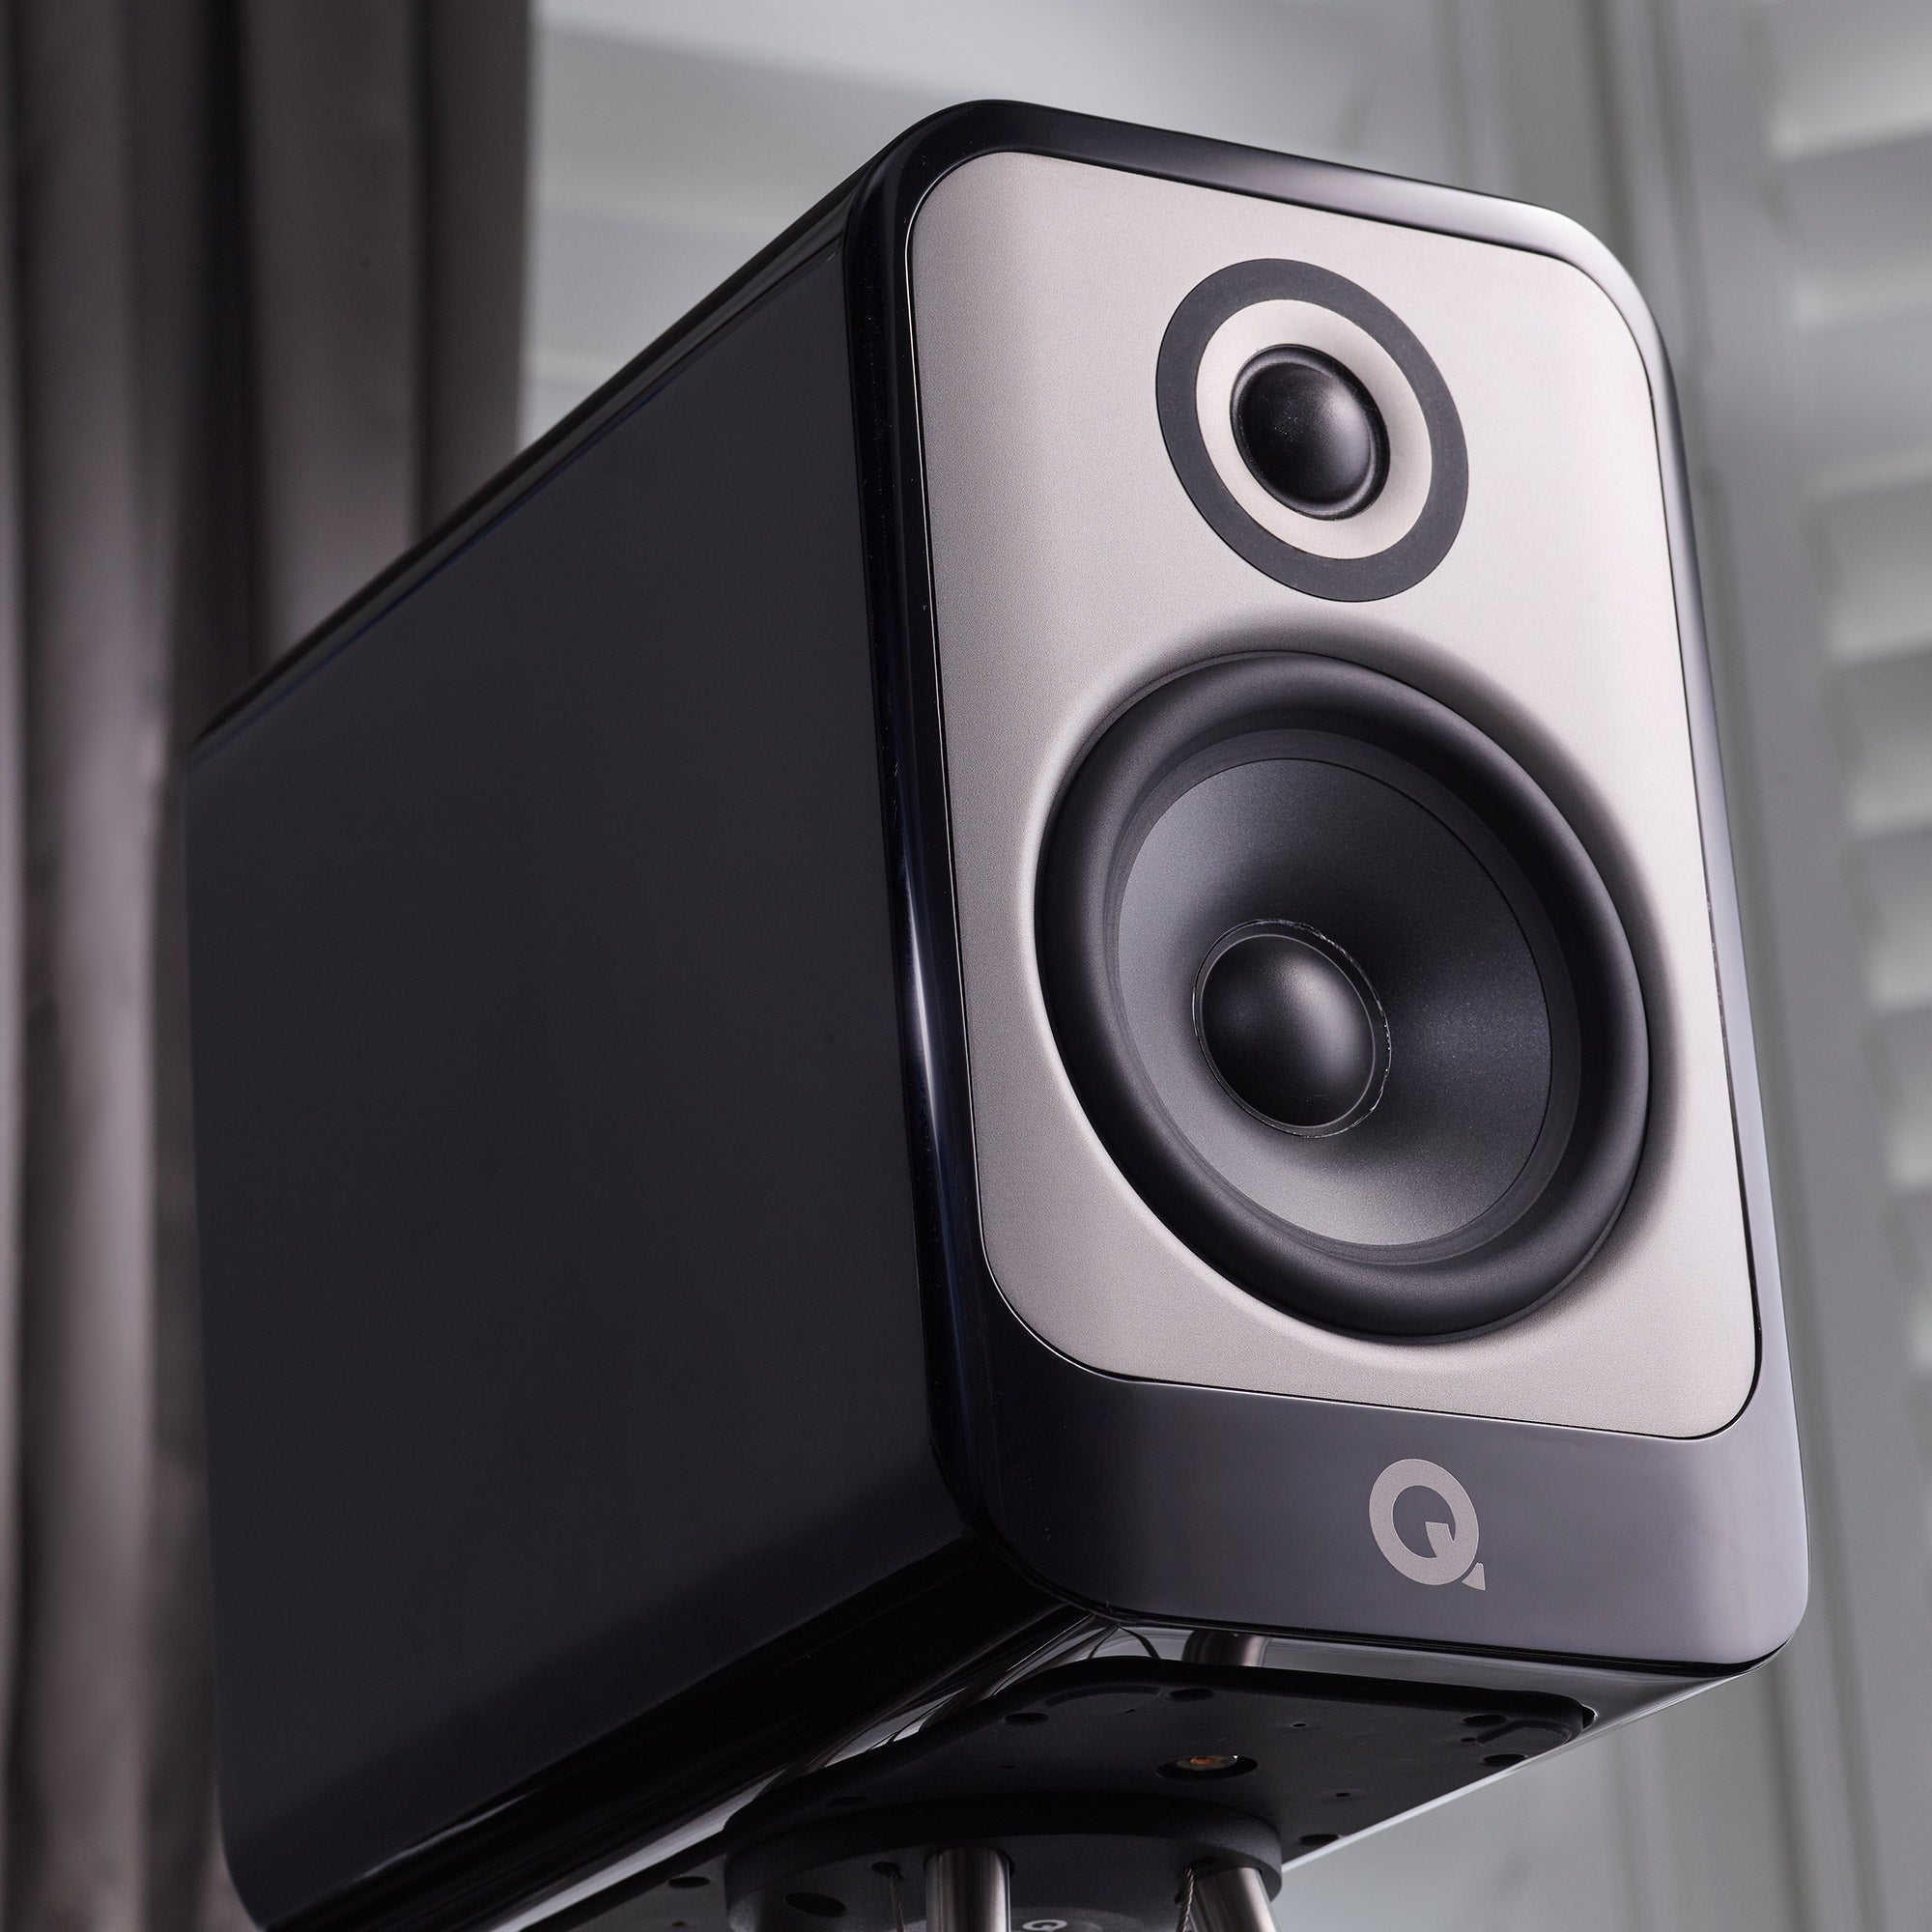 Q Acoustics Q Concept 30 Passive Bookshelf Speakers Pair Gloss Black - 5  Mid/Bass Driver, Tweeter Driver 0.9 - Passive Speakers for Home Theater